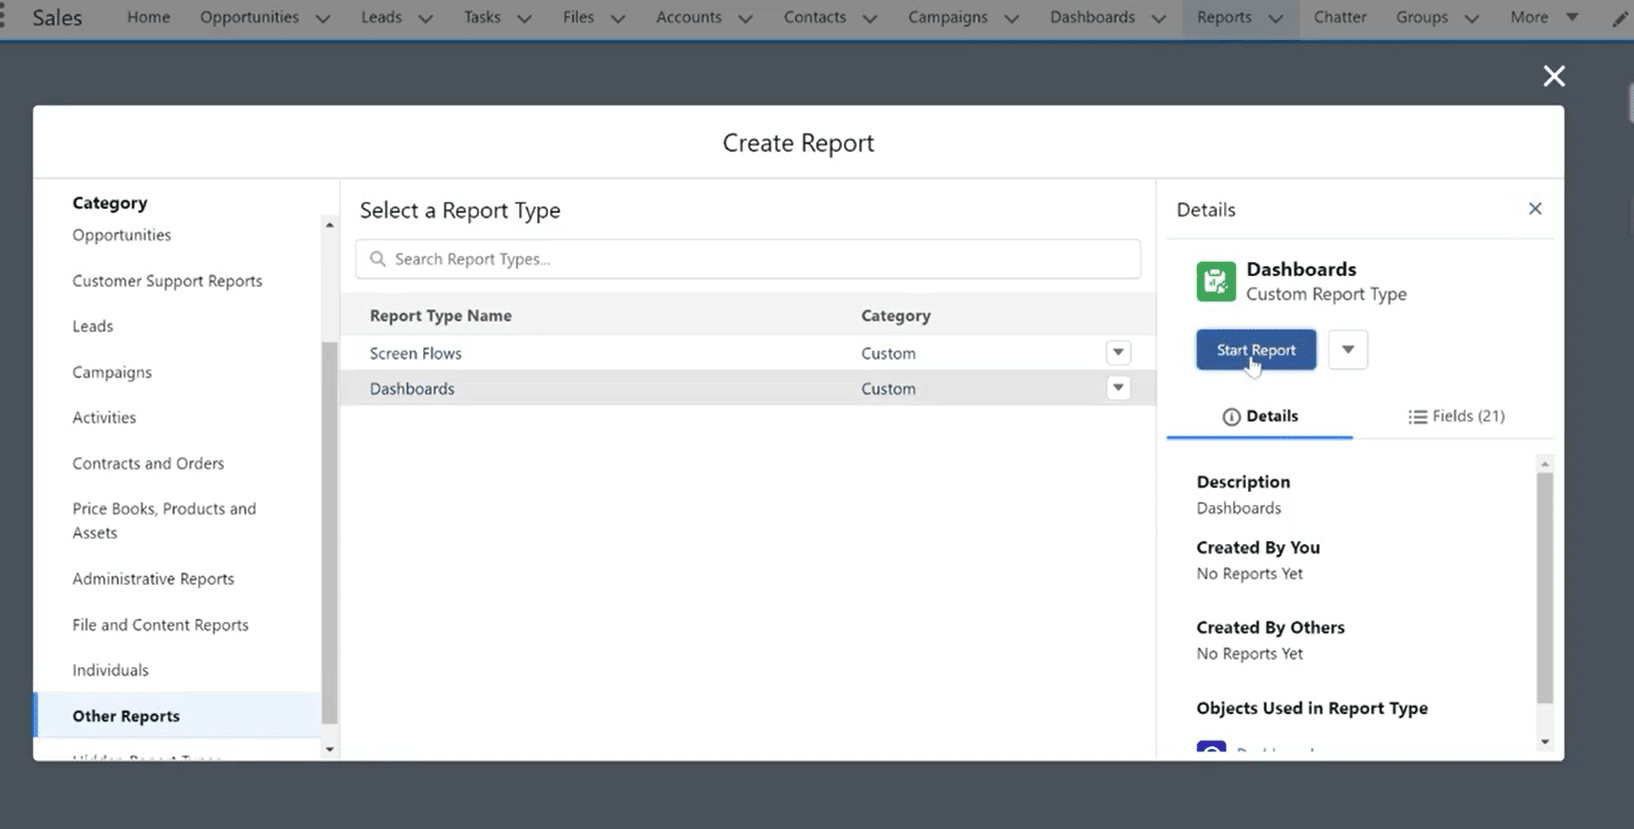 Saving the custom report type in Salesforce